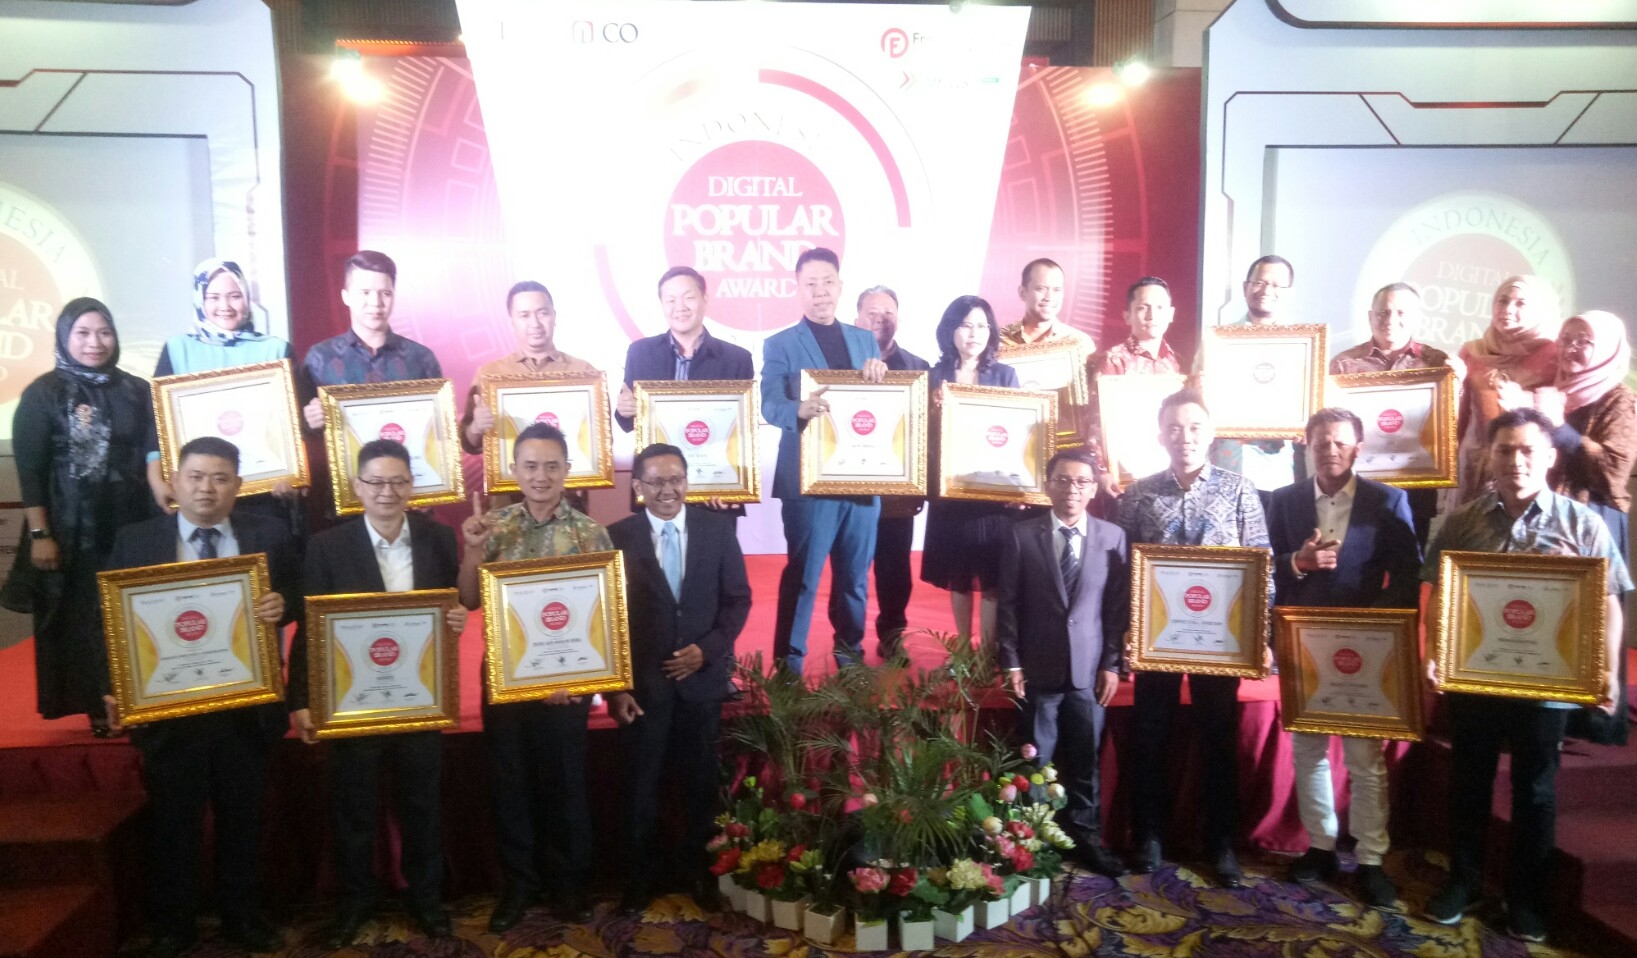 80 Kategori Franchise Raih Indonesia Digital Popular Brand award 2019